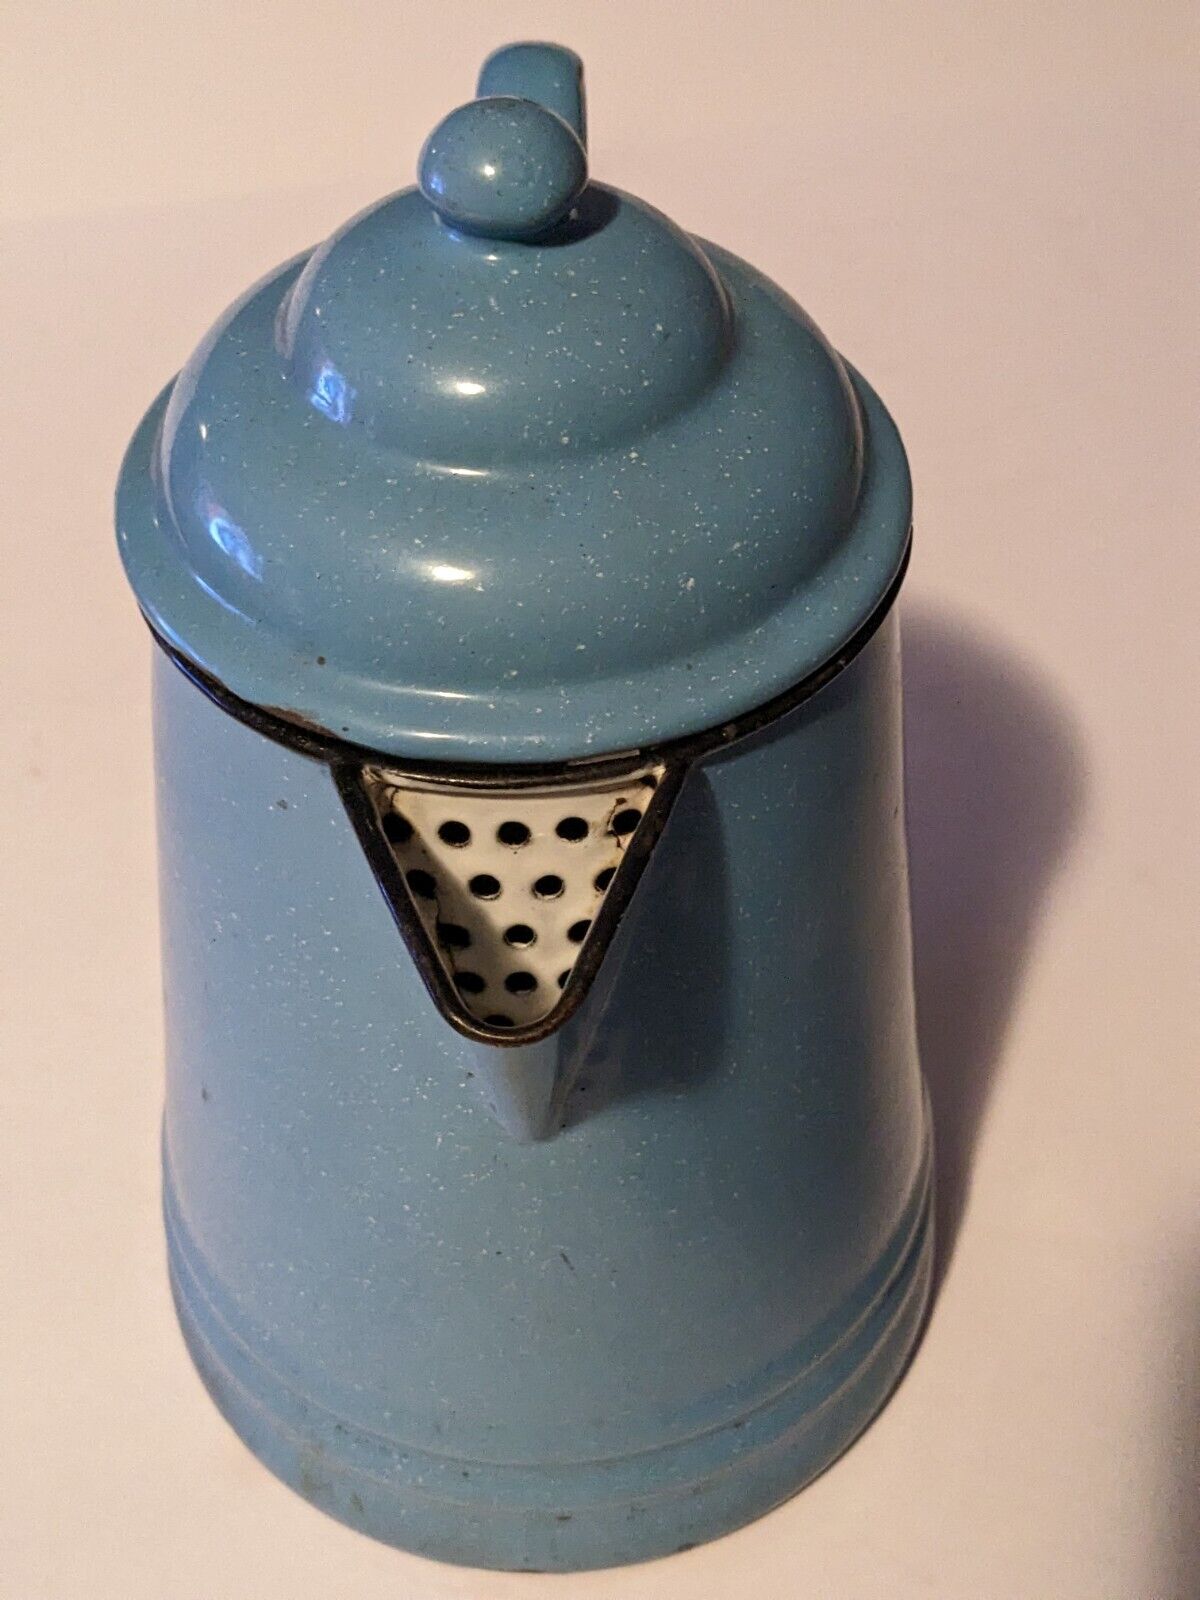 Large Vintage Enamelware Aqua Blue-White Speckled Cowboy Coffee Kettle Pot